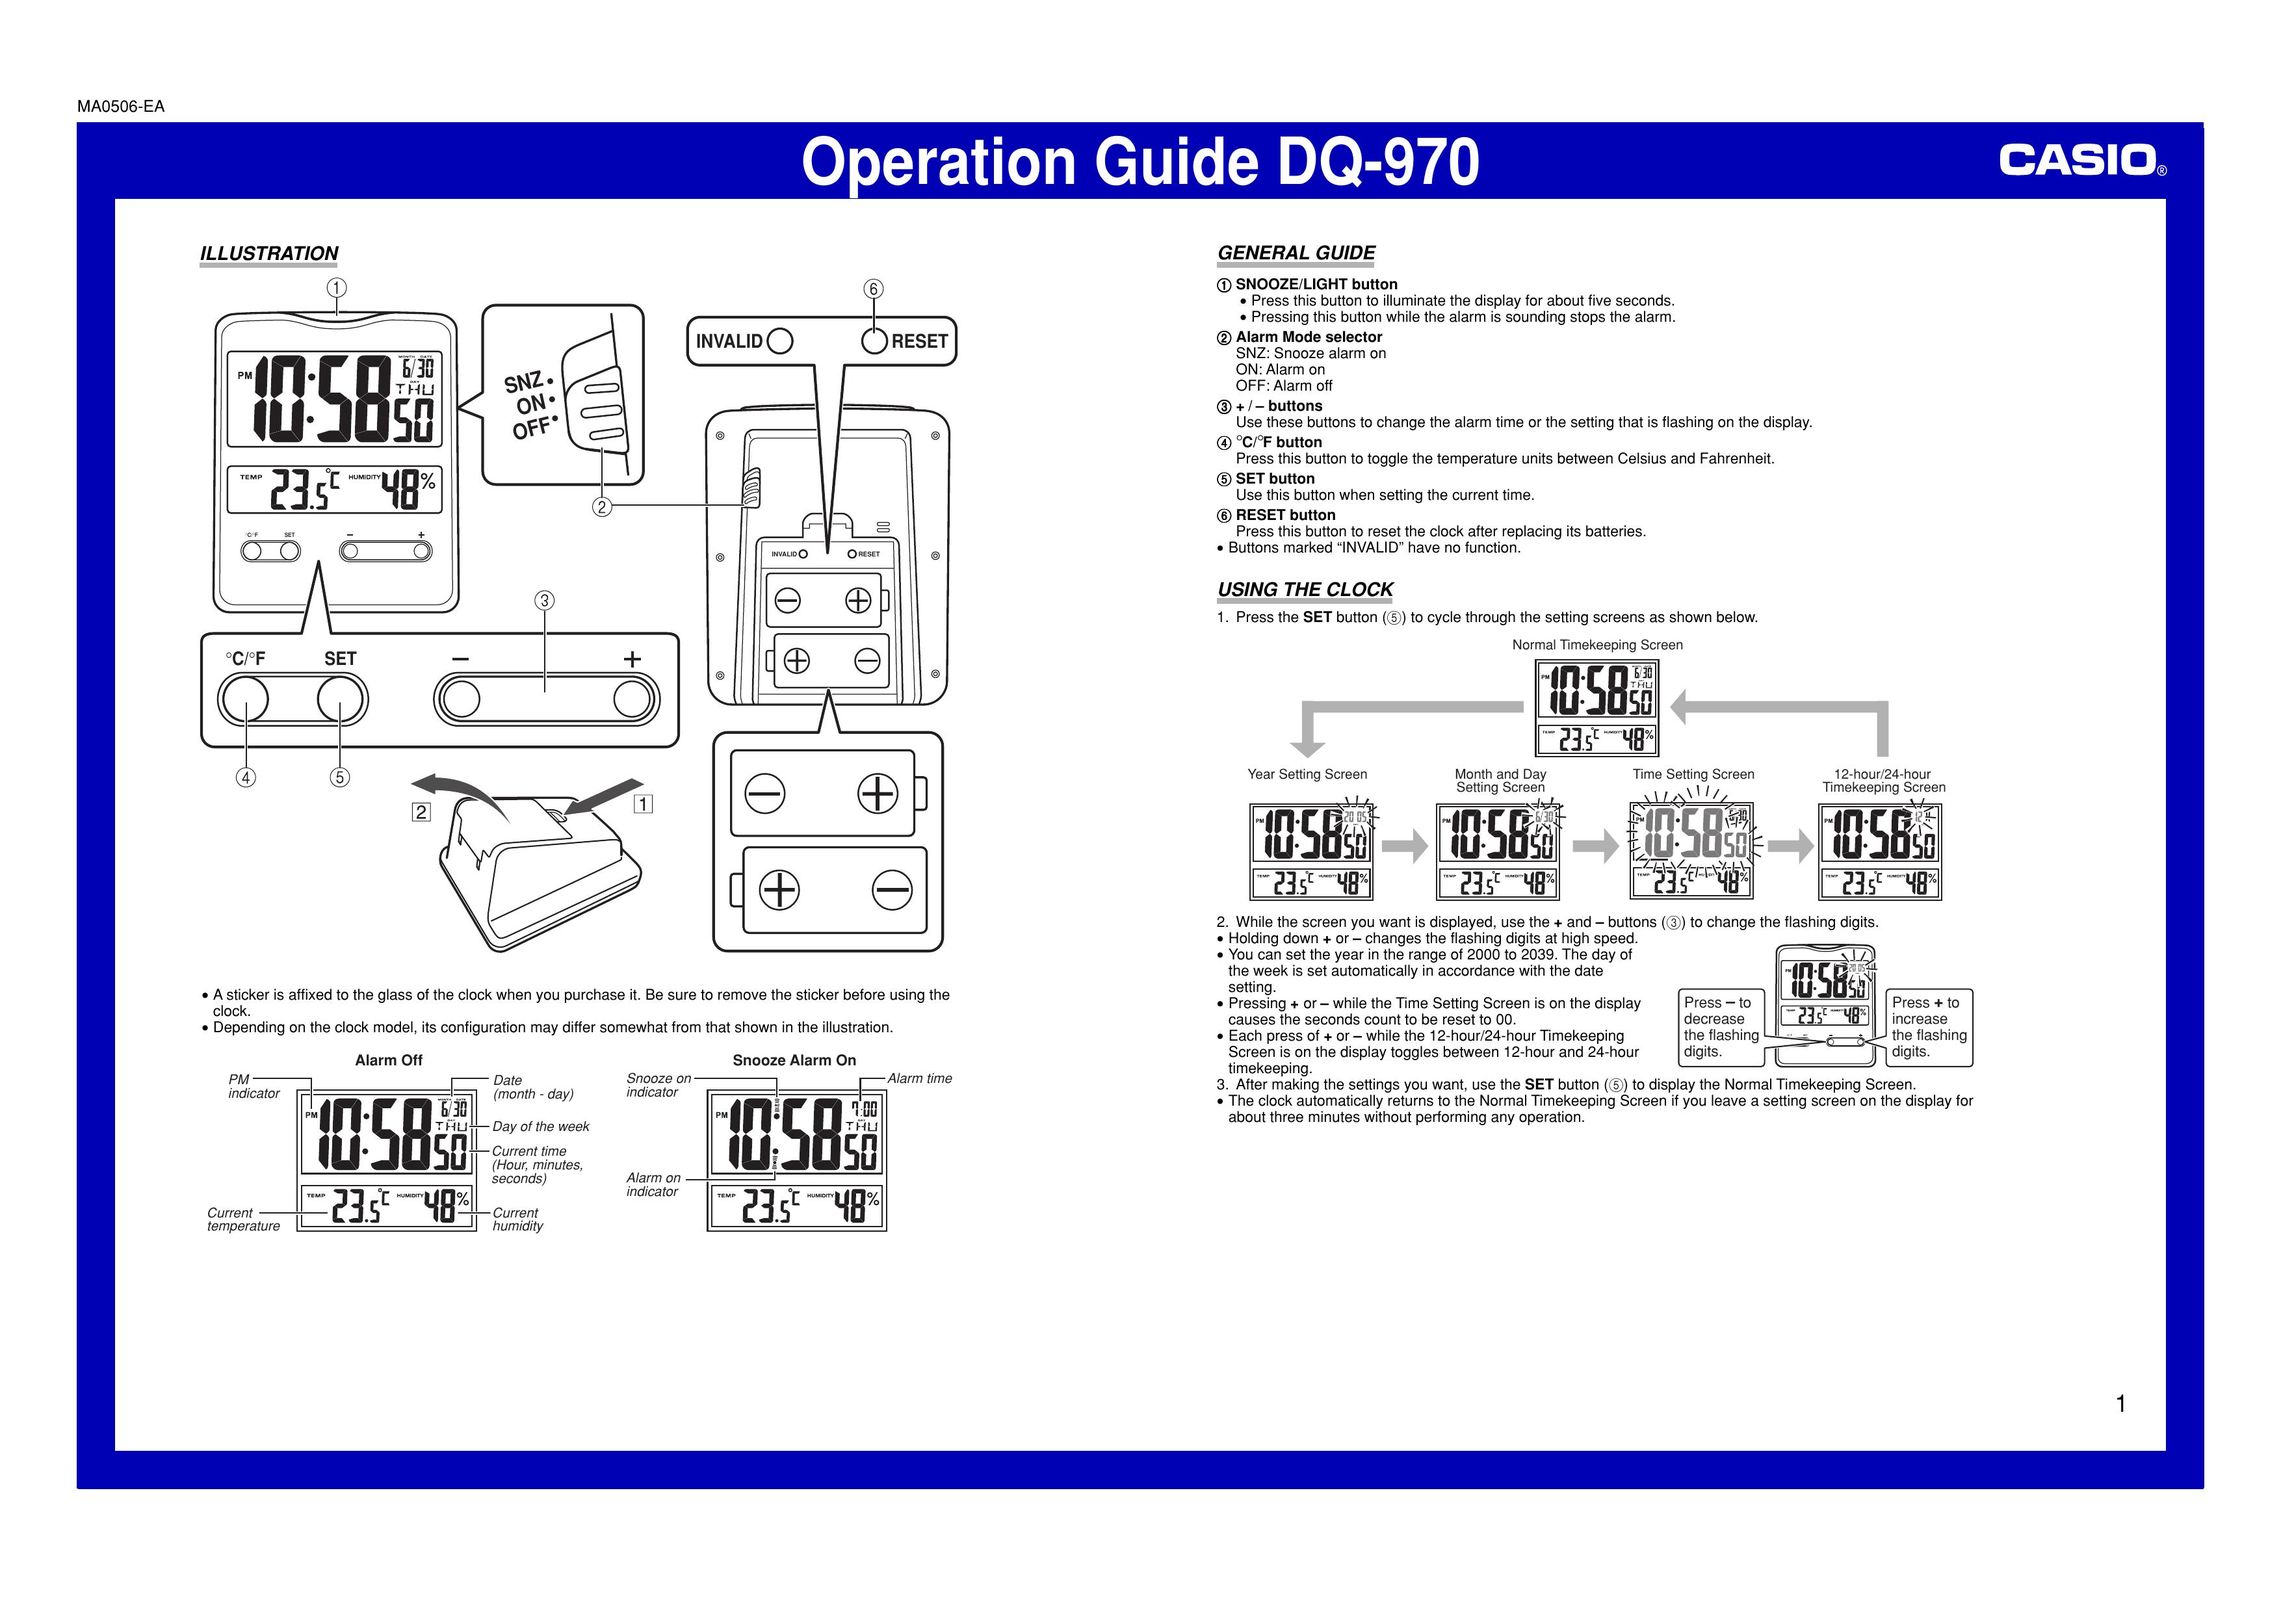 Casio DQ-970 Clock User Manual